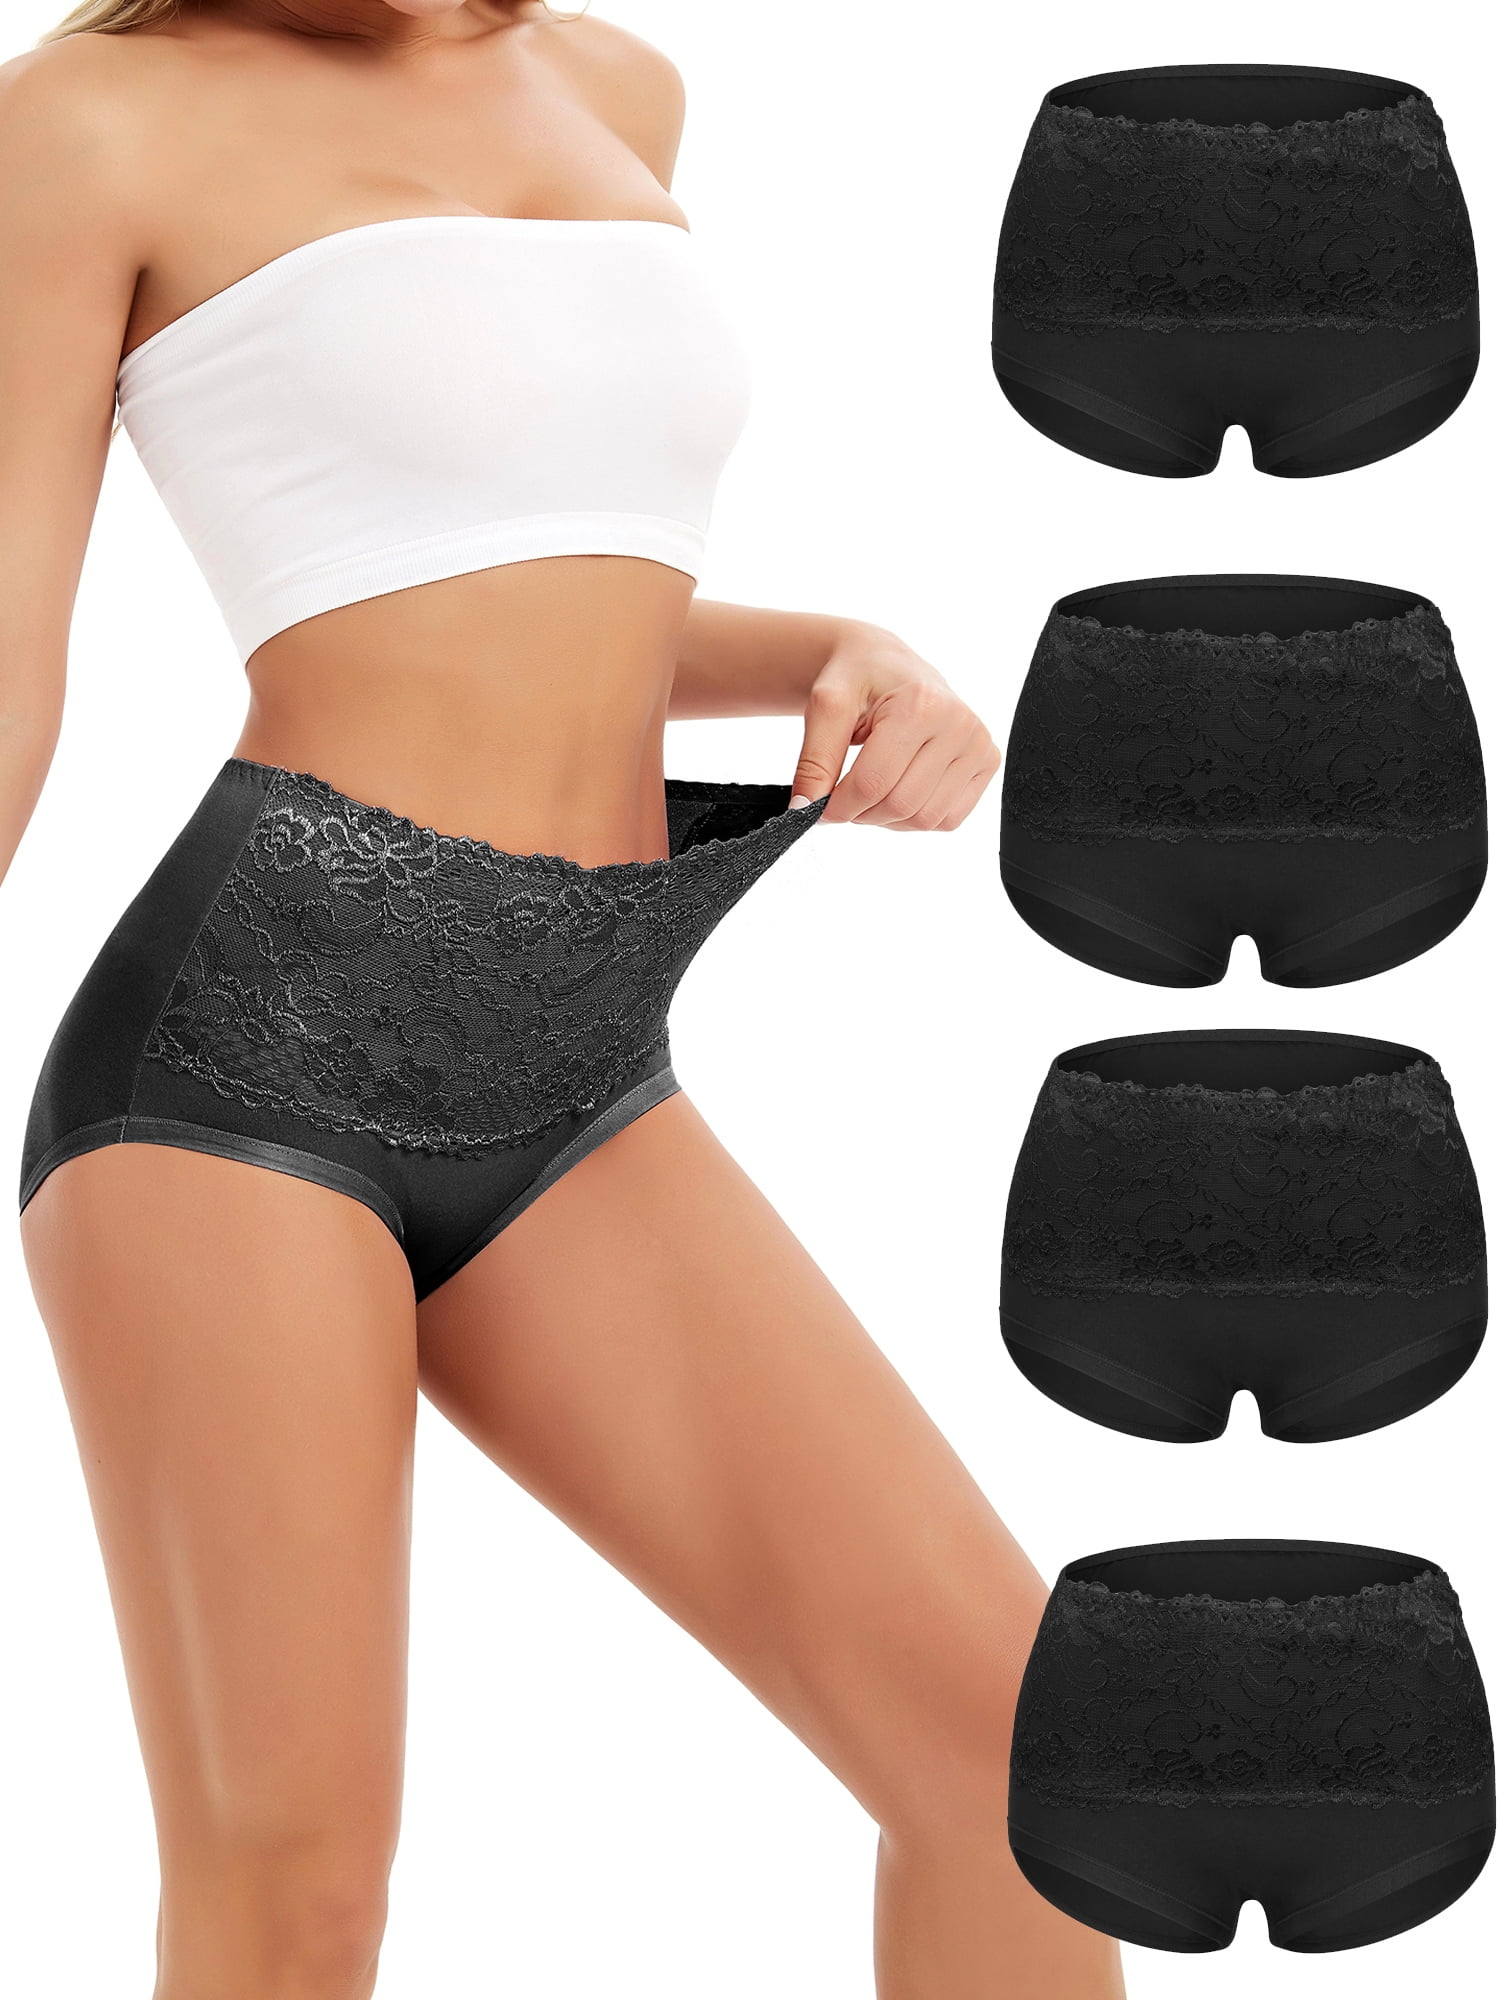 4pcs/pack Women's Underwear Rose High Waist Tummy Control Comfortable Fit